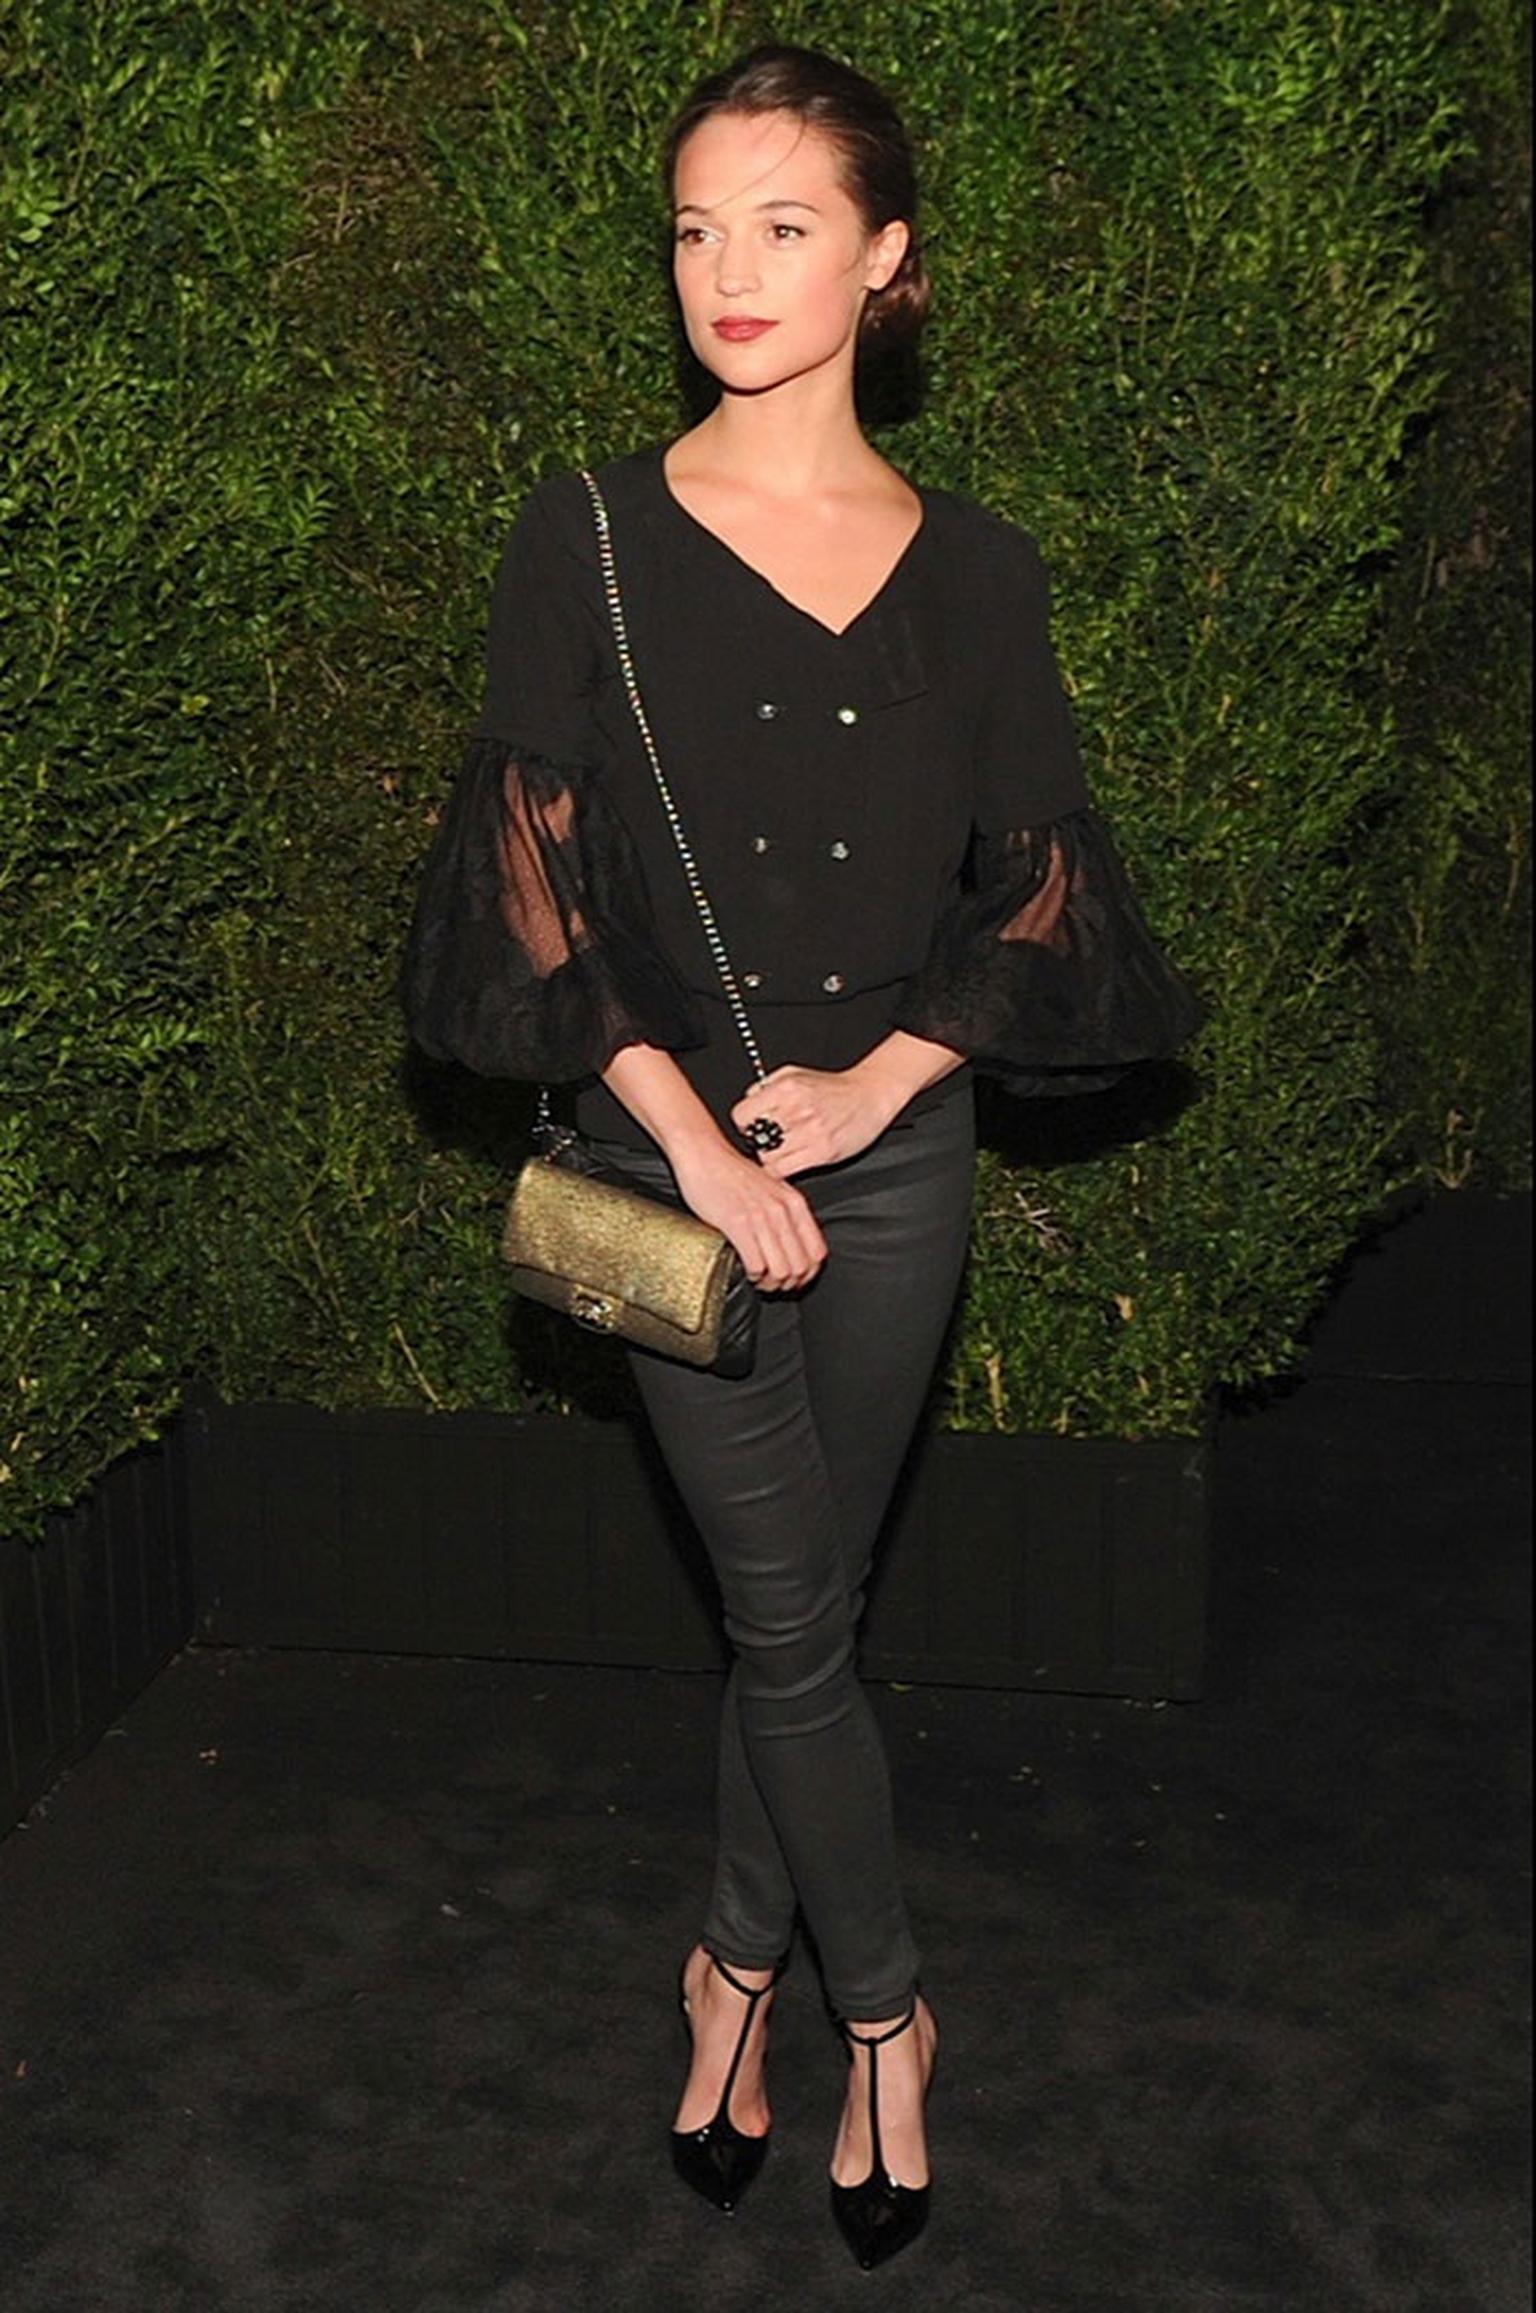 Alicia-Vikander-Chanel-and-Charles-Finch-Oscars-Dinner-23-fevrier-2013.jpg